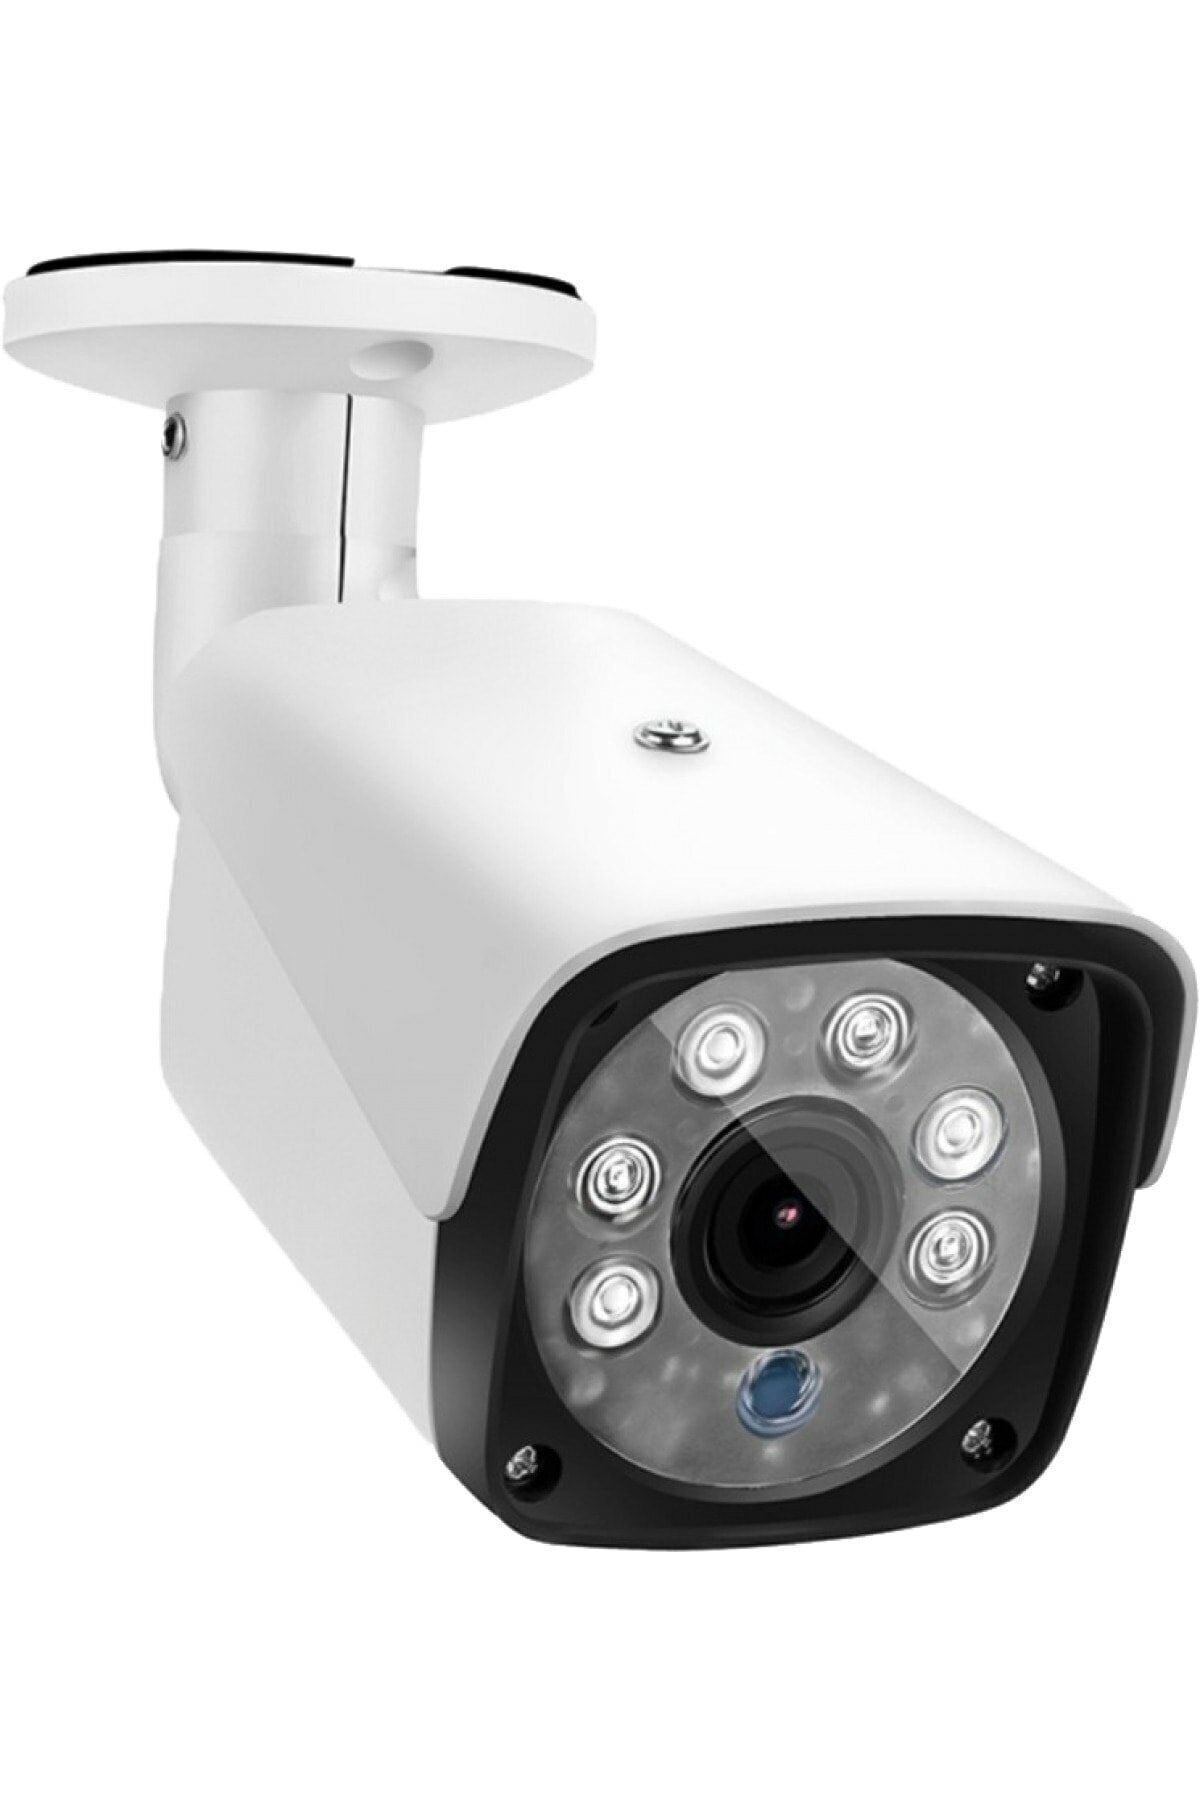 bluetech 5 Mp 1440p Ahd Full Hd Su Geçirmez Gece Görüşlü Dış Ortam Kamerası